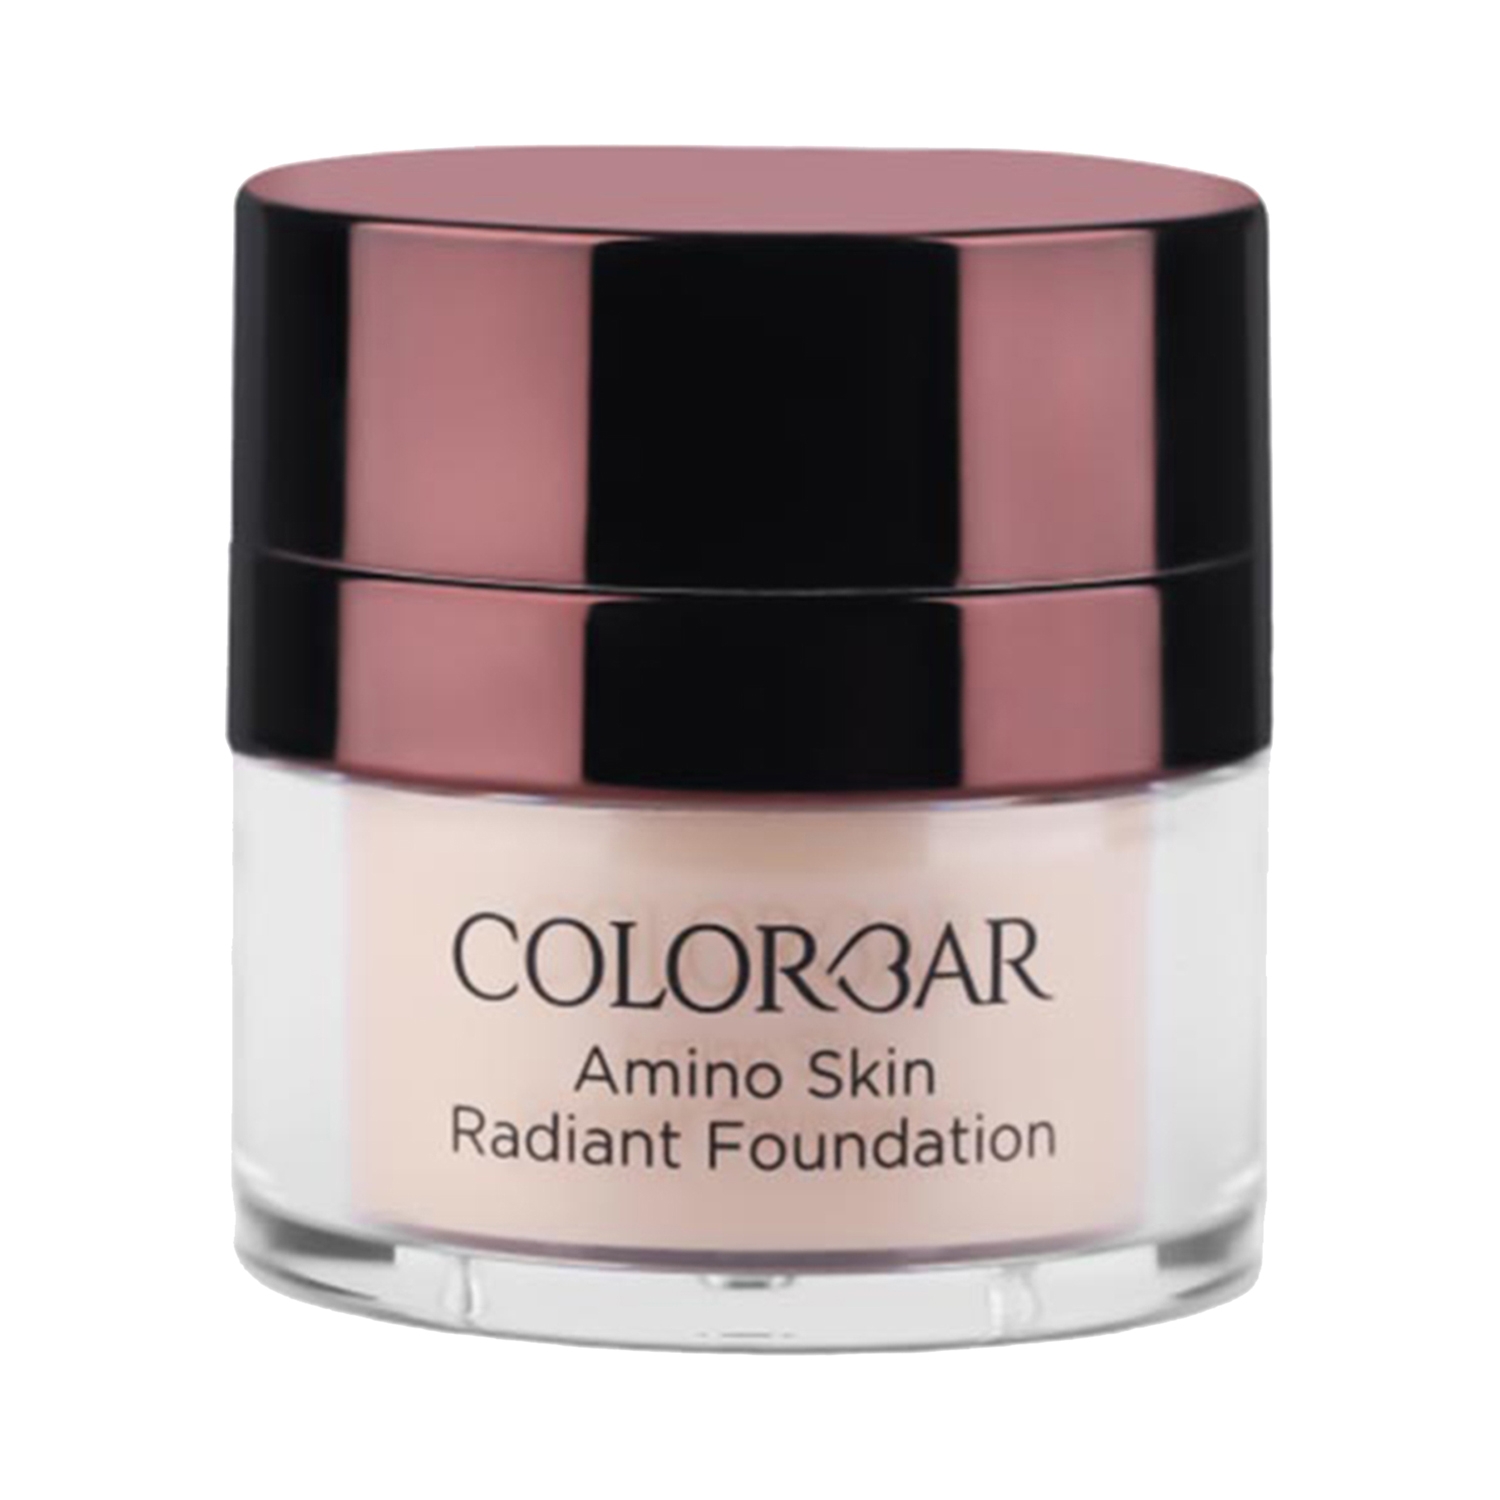 Colorbar | Colorbar Amino Skin Radiant Foundation - 004 Rose Mild (15g)